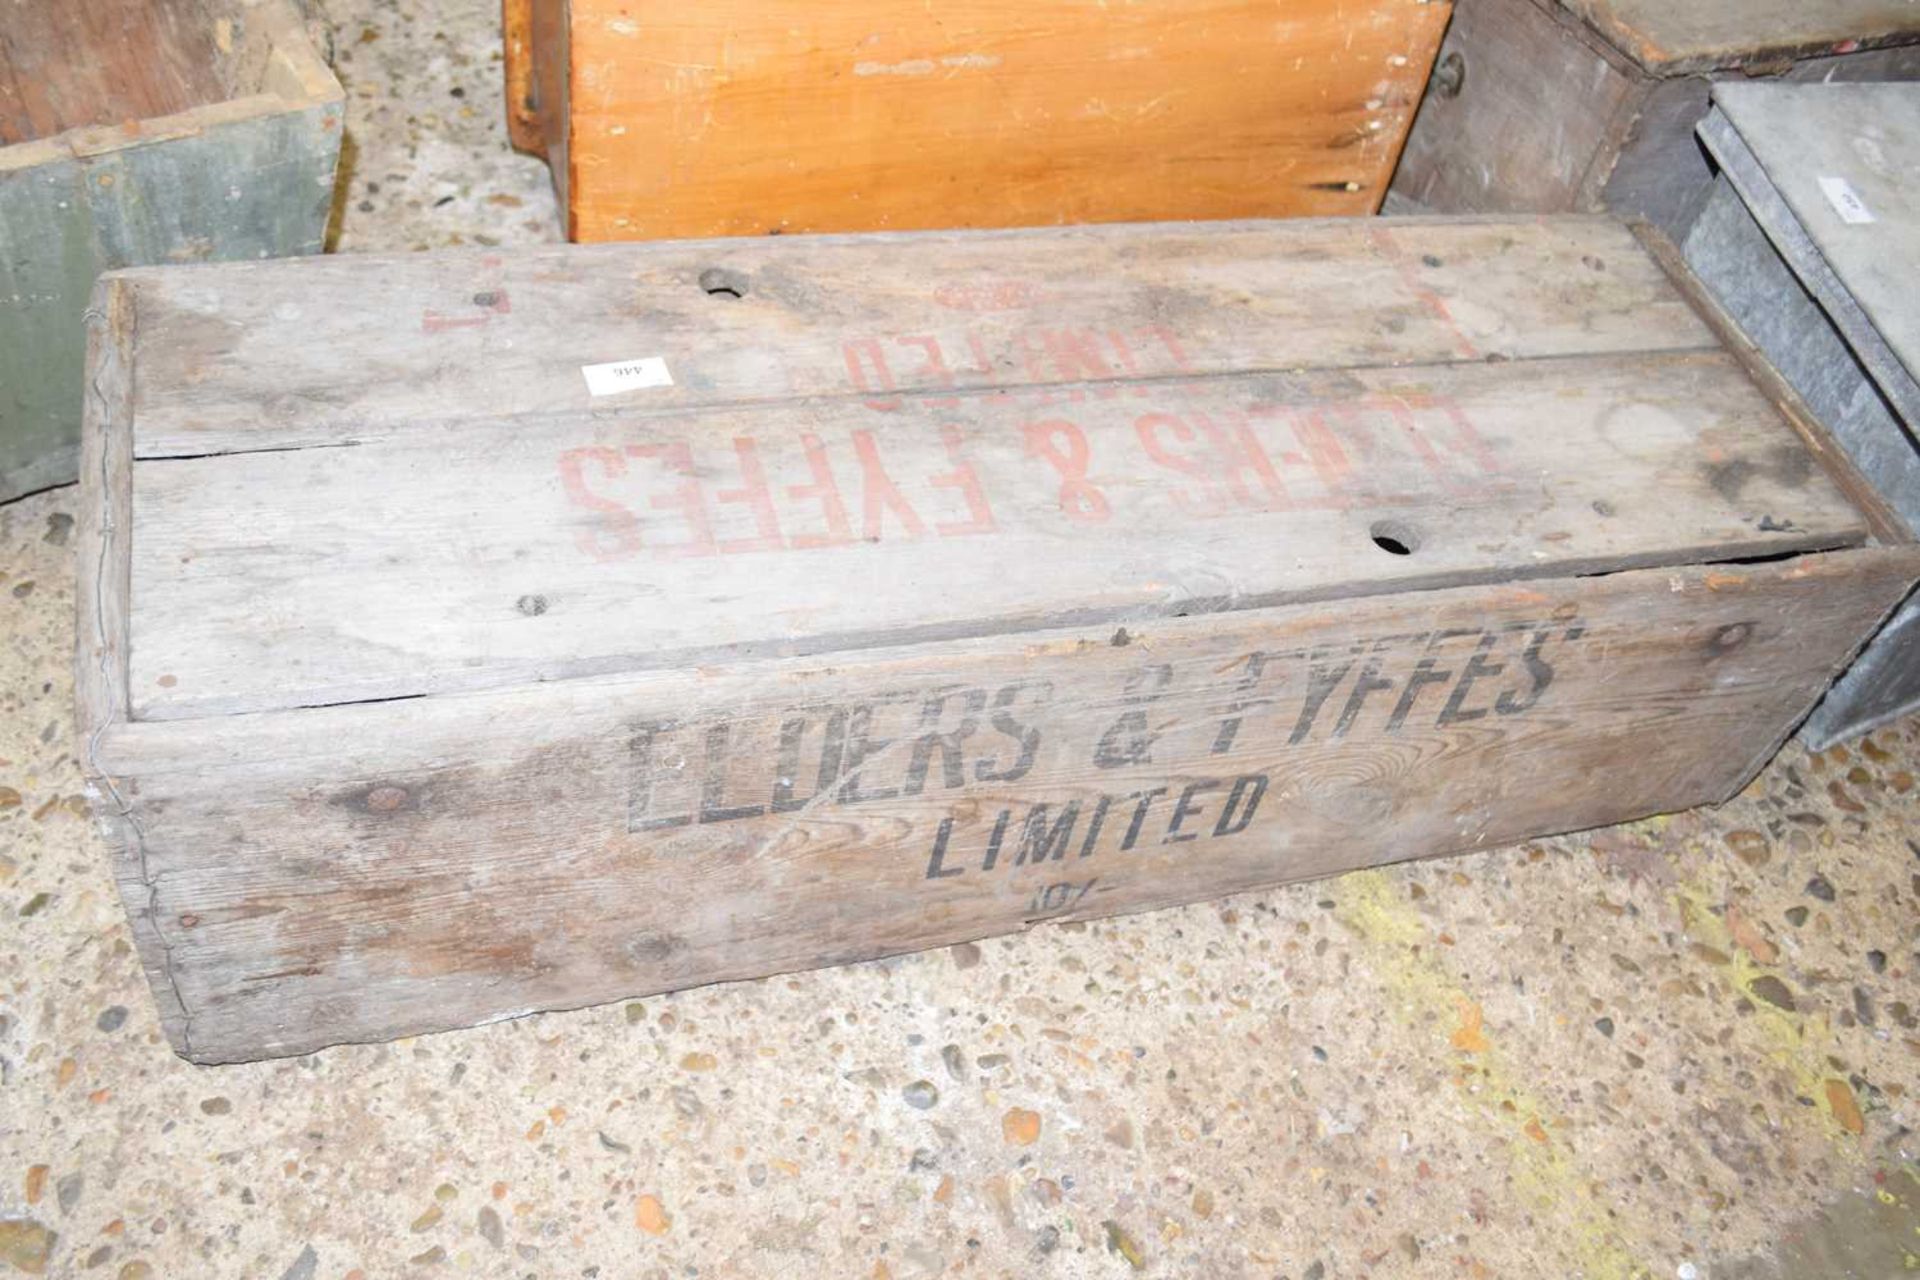 Vintage wooden crate marked 'Elders & Sysses Ltd'